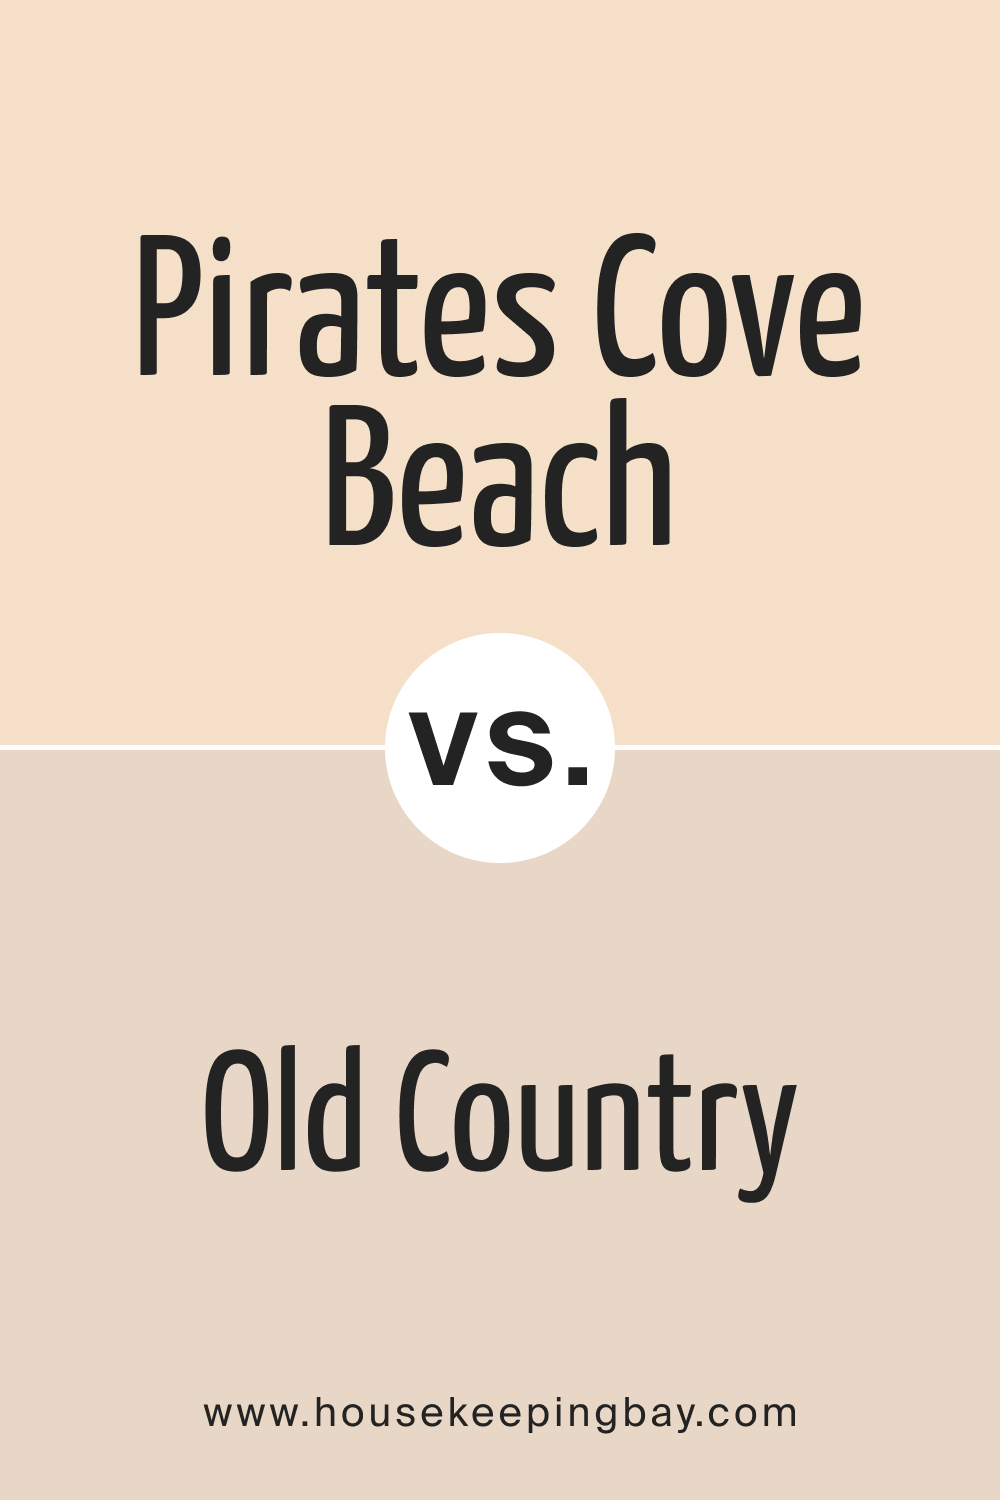 Pirates Cove Beach OC 80 vs. OC 76 Old Country